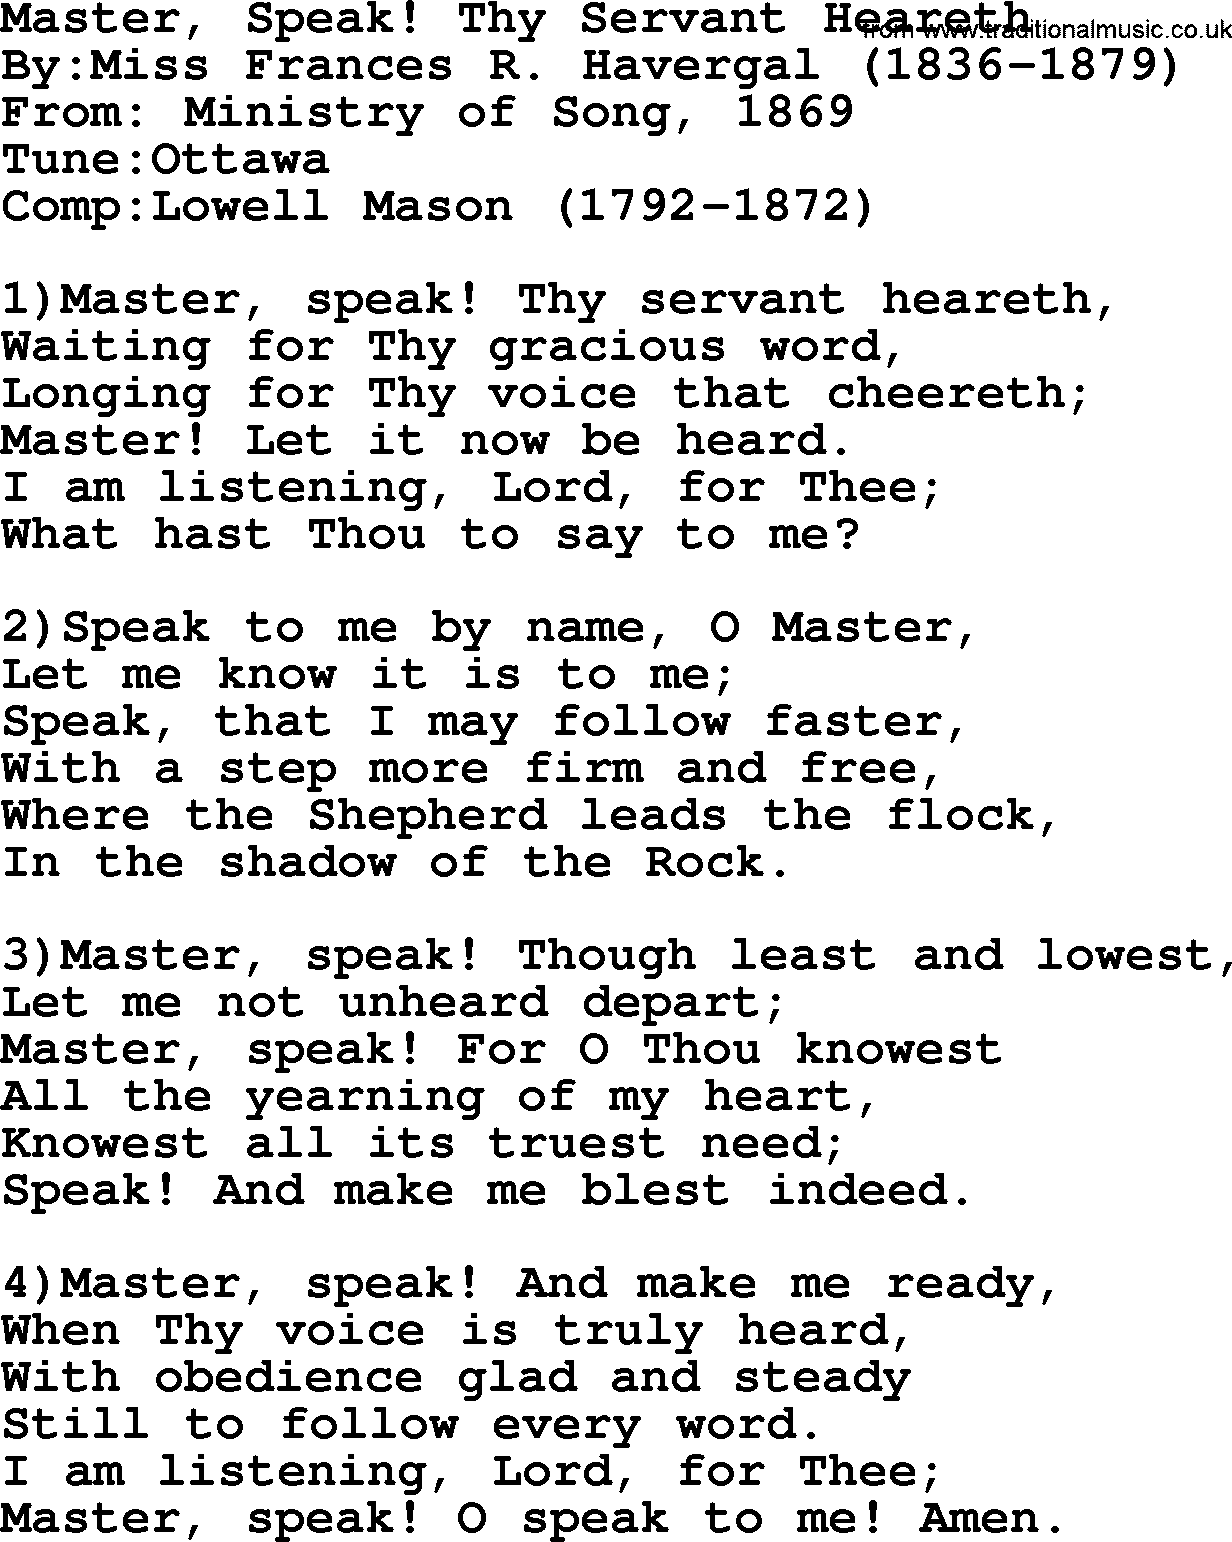 Methodist Hymn: Master, Speak! Thy Servant Heareth, lyrics